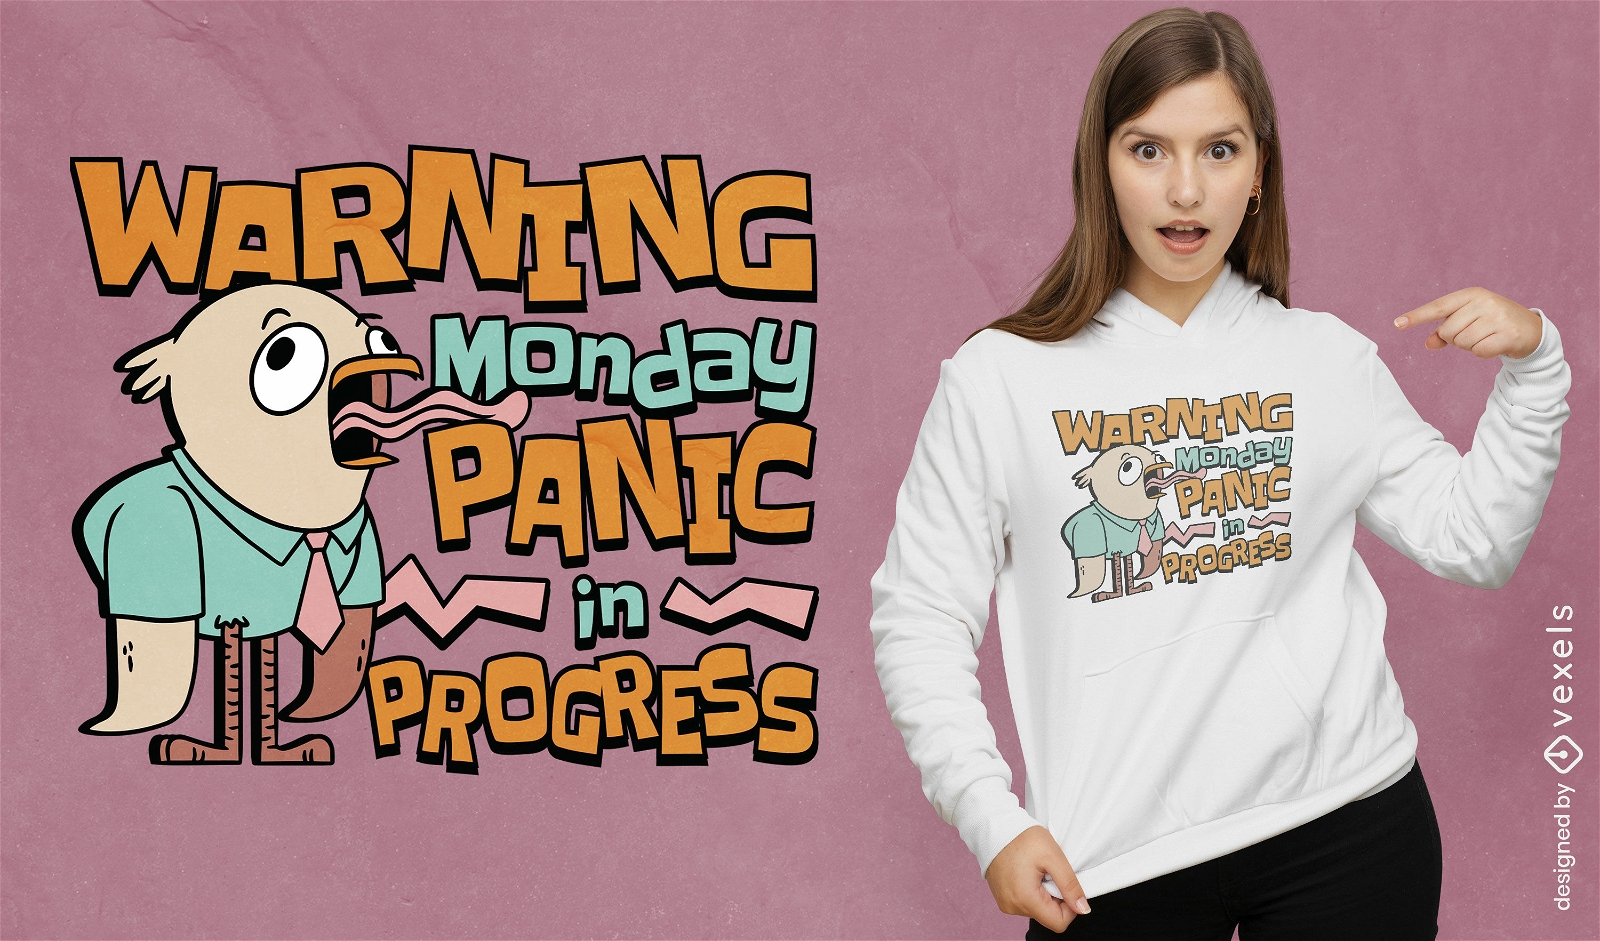 Monday panic humorous t-shirt design